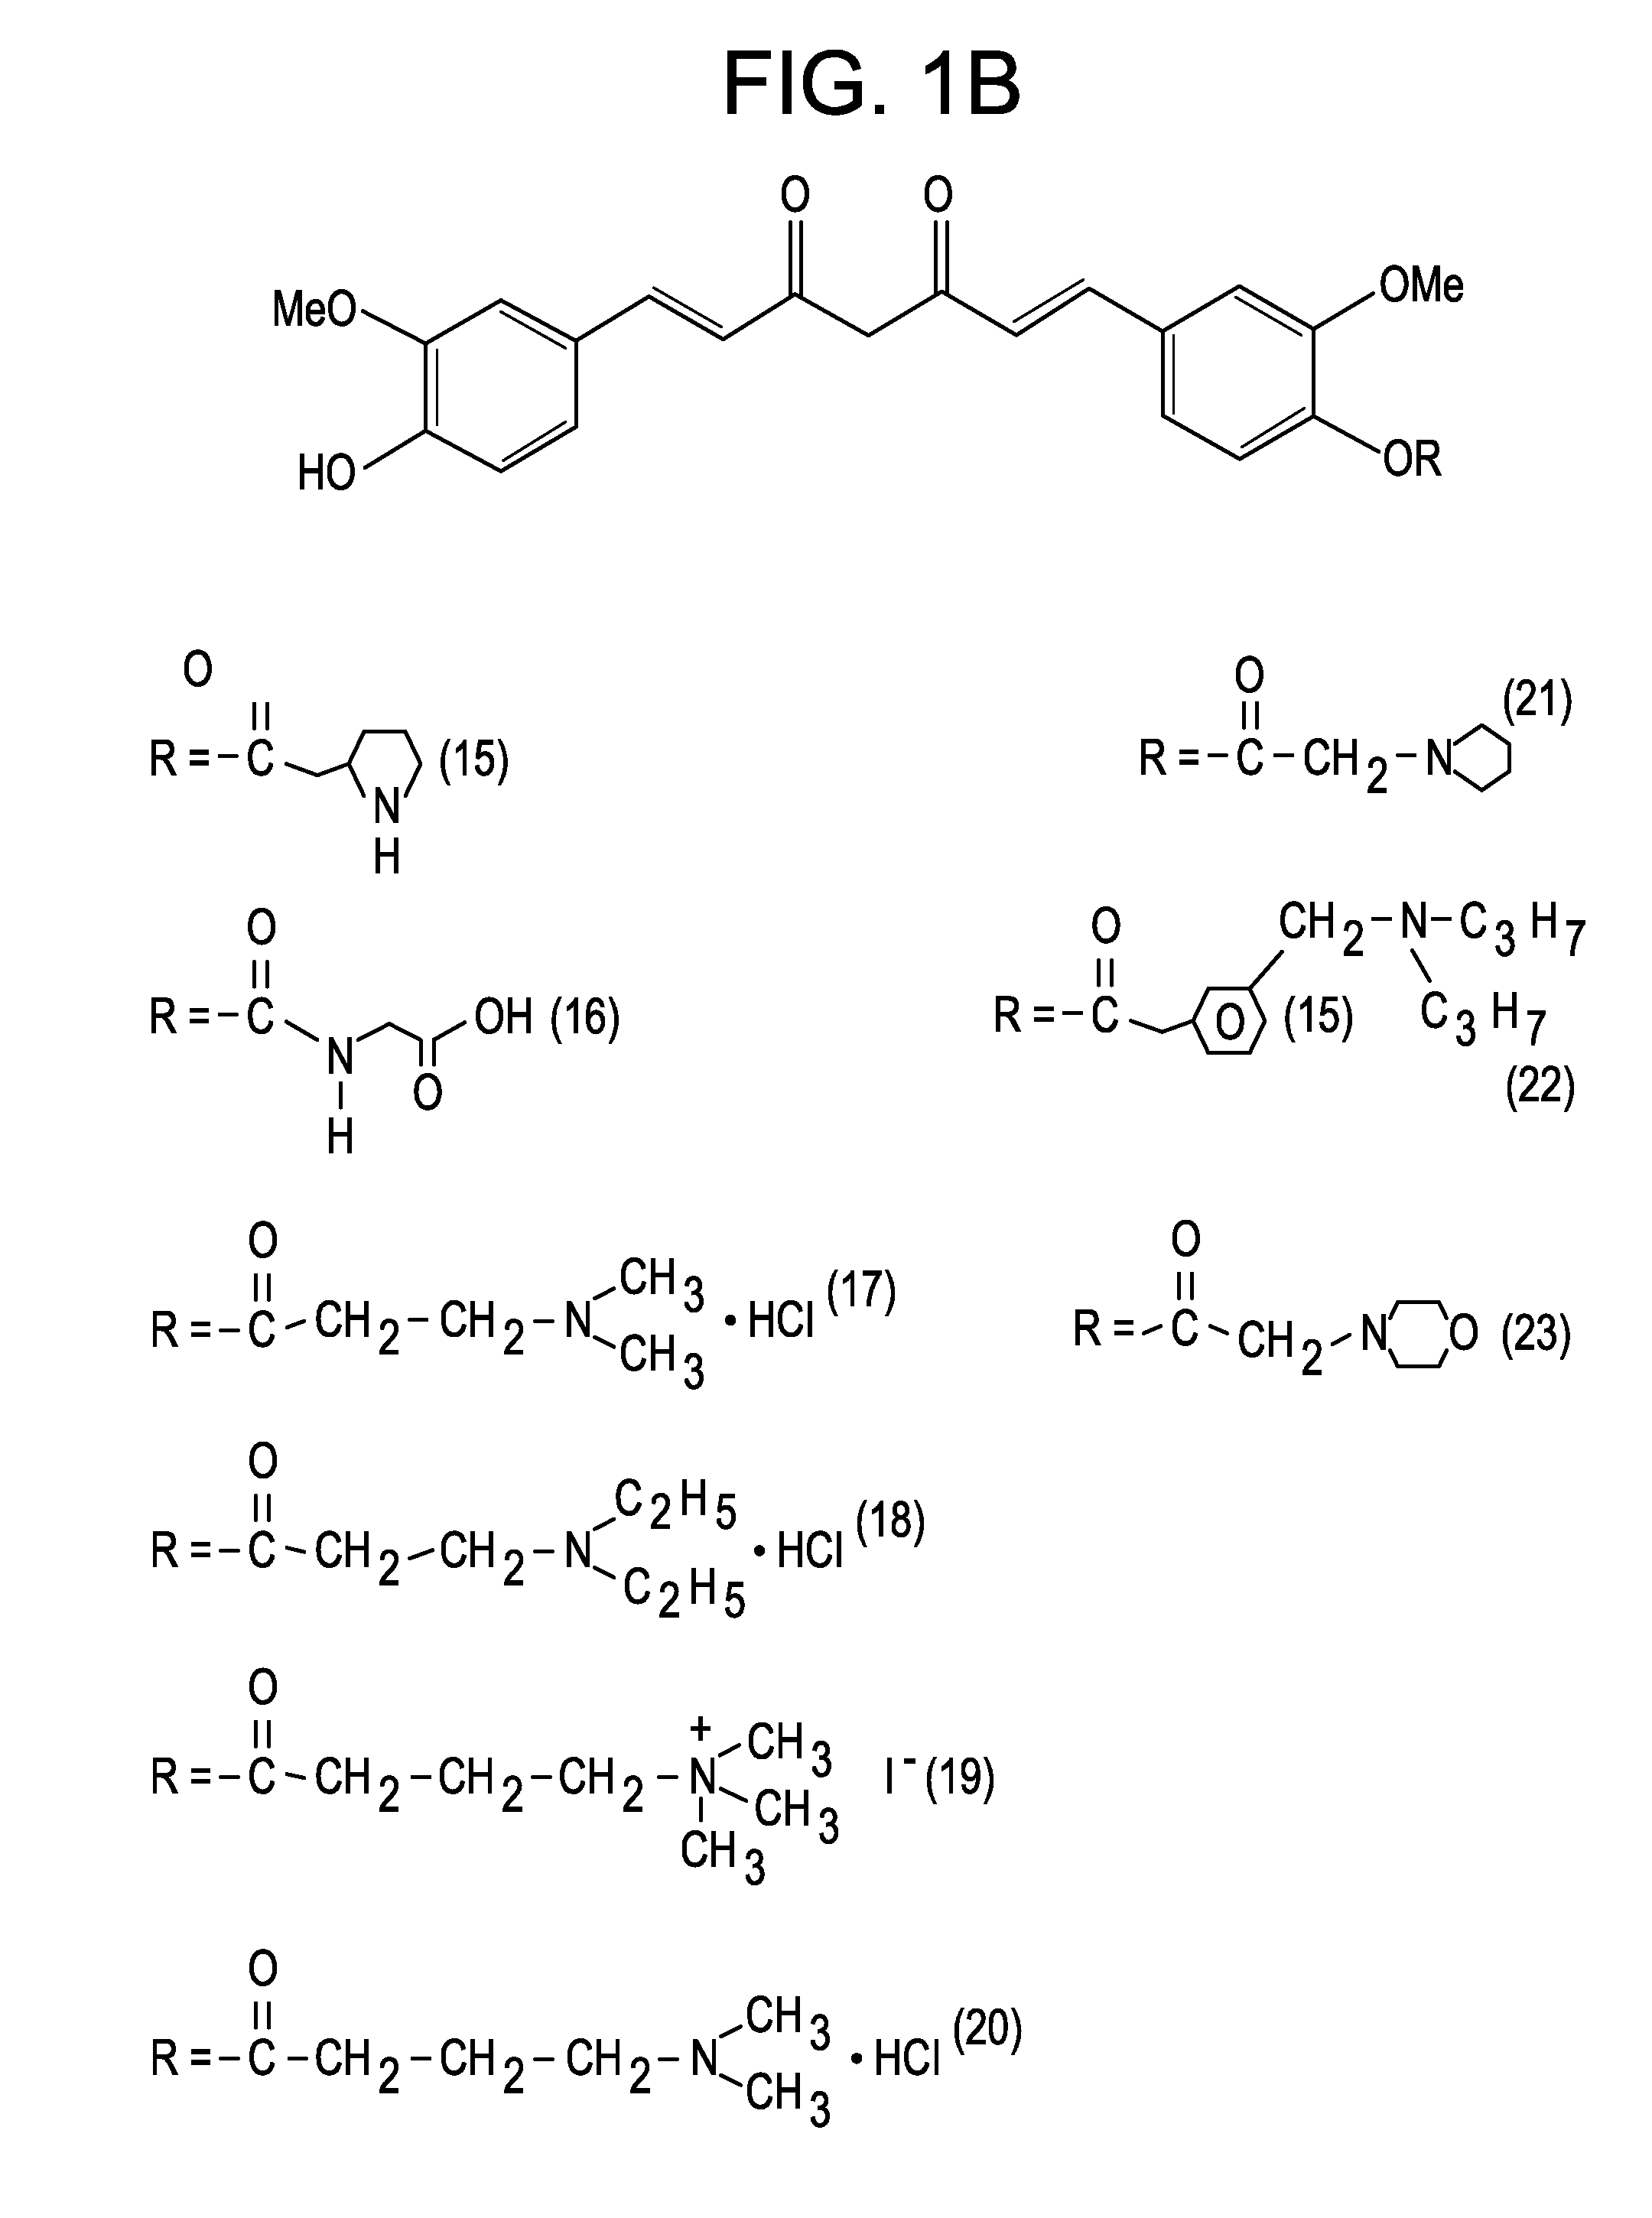 Methylene blue—curcumin analog for the treatment of alzheimer's disease